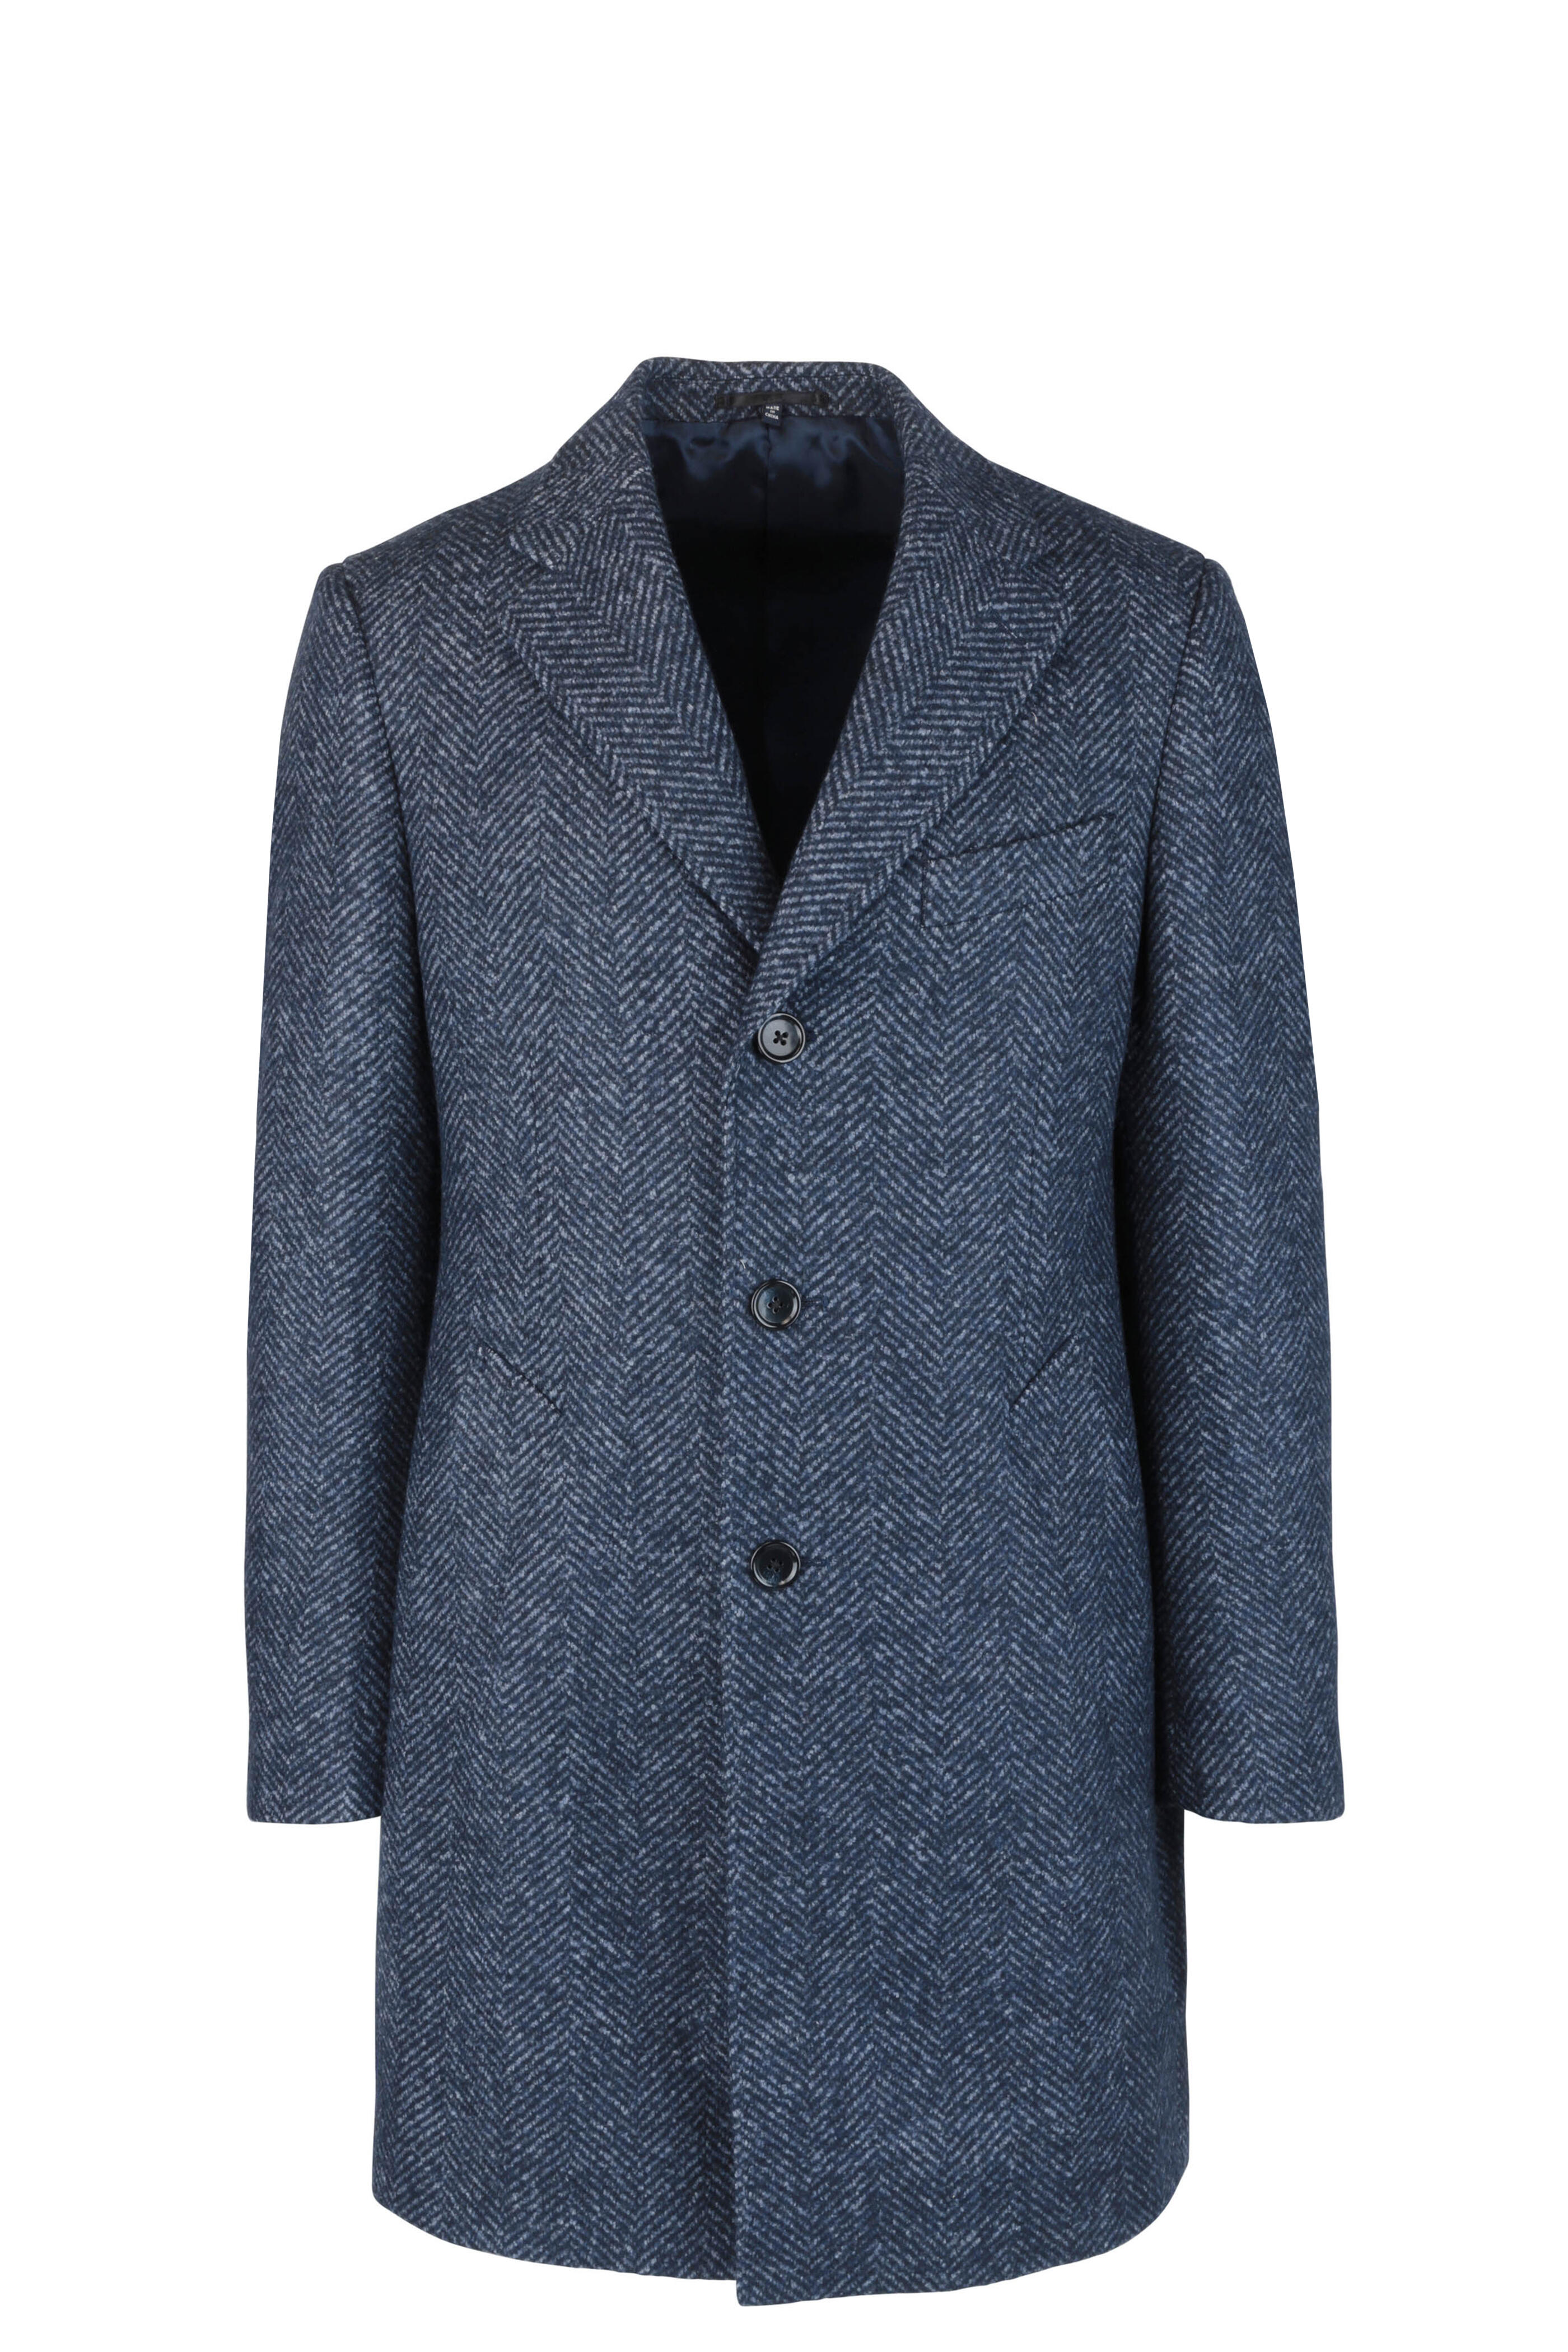 Atelier Munro - Slate Blue Wool Blend Herringbone Overcoat